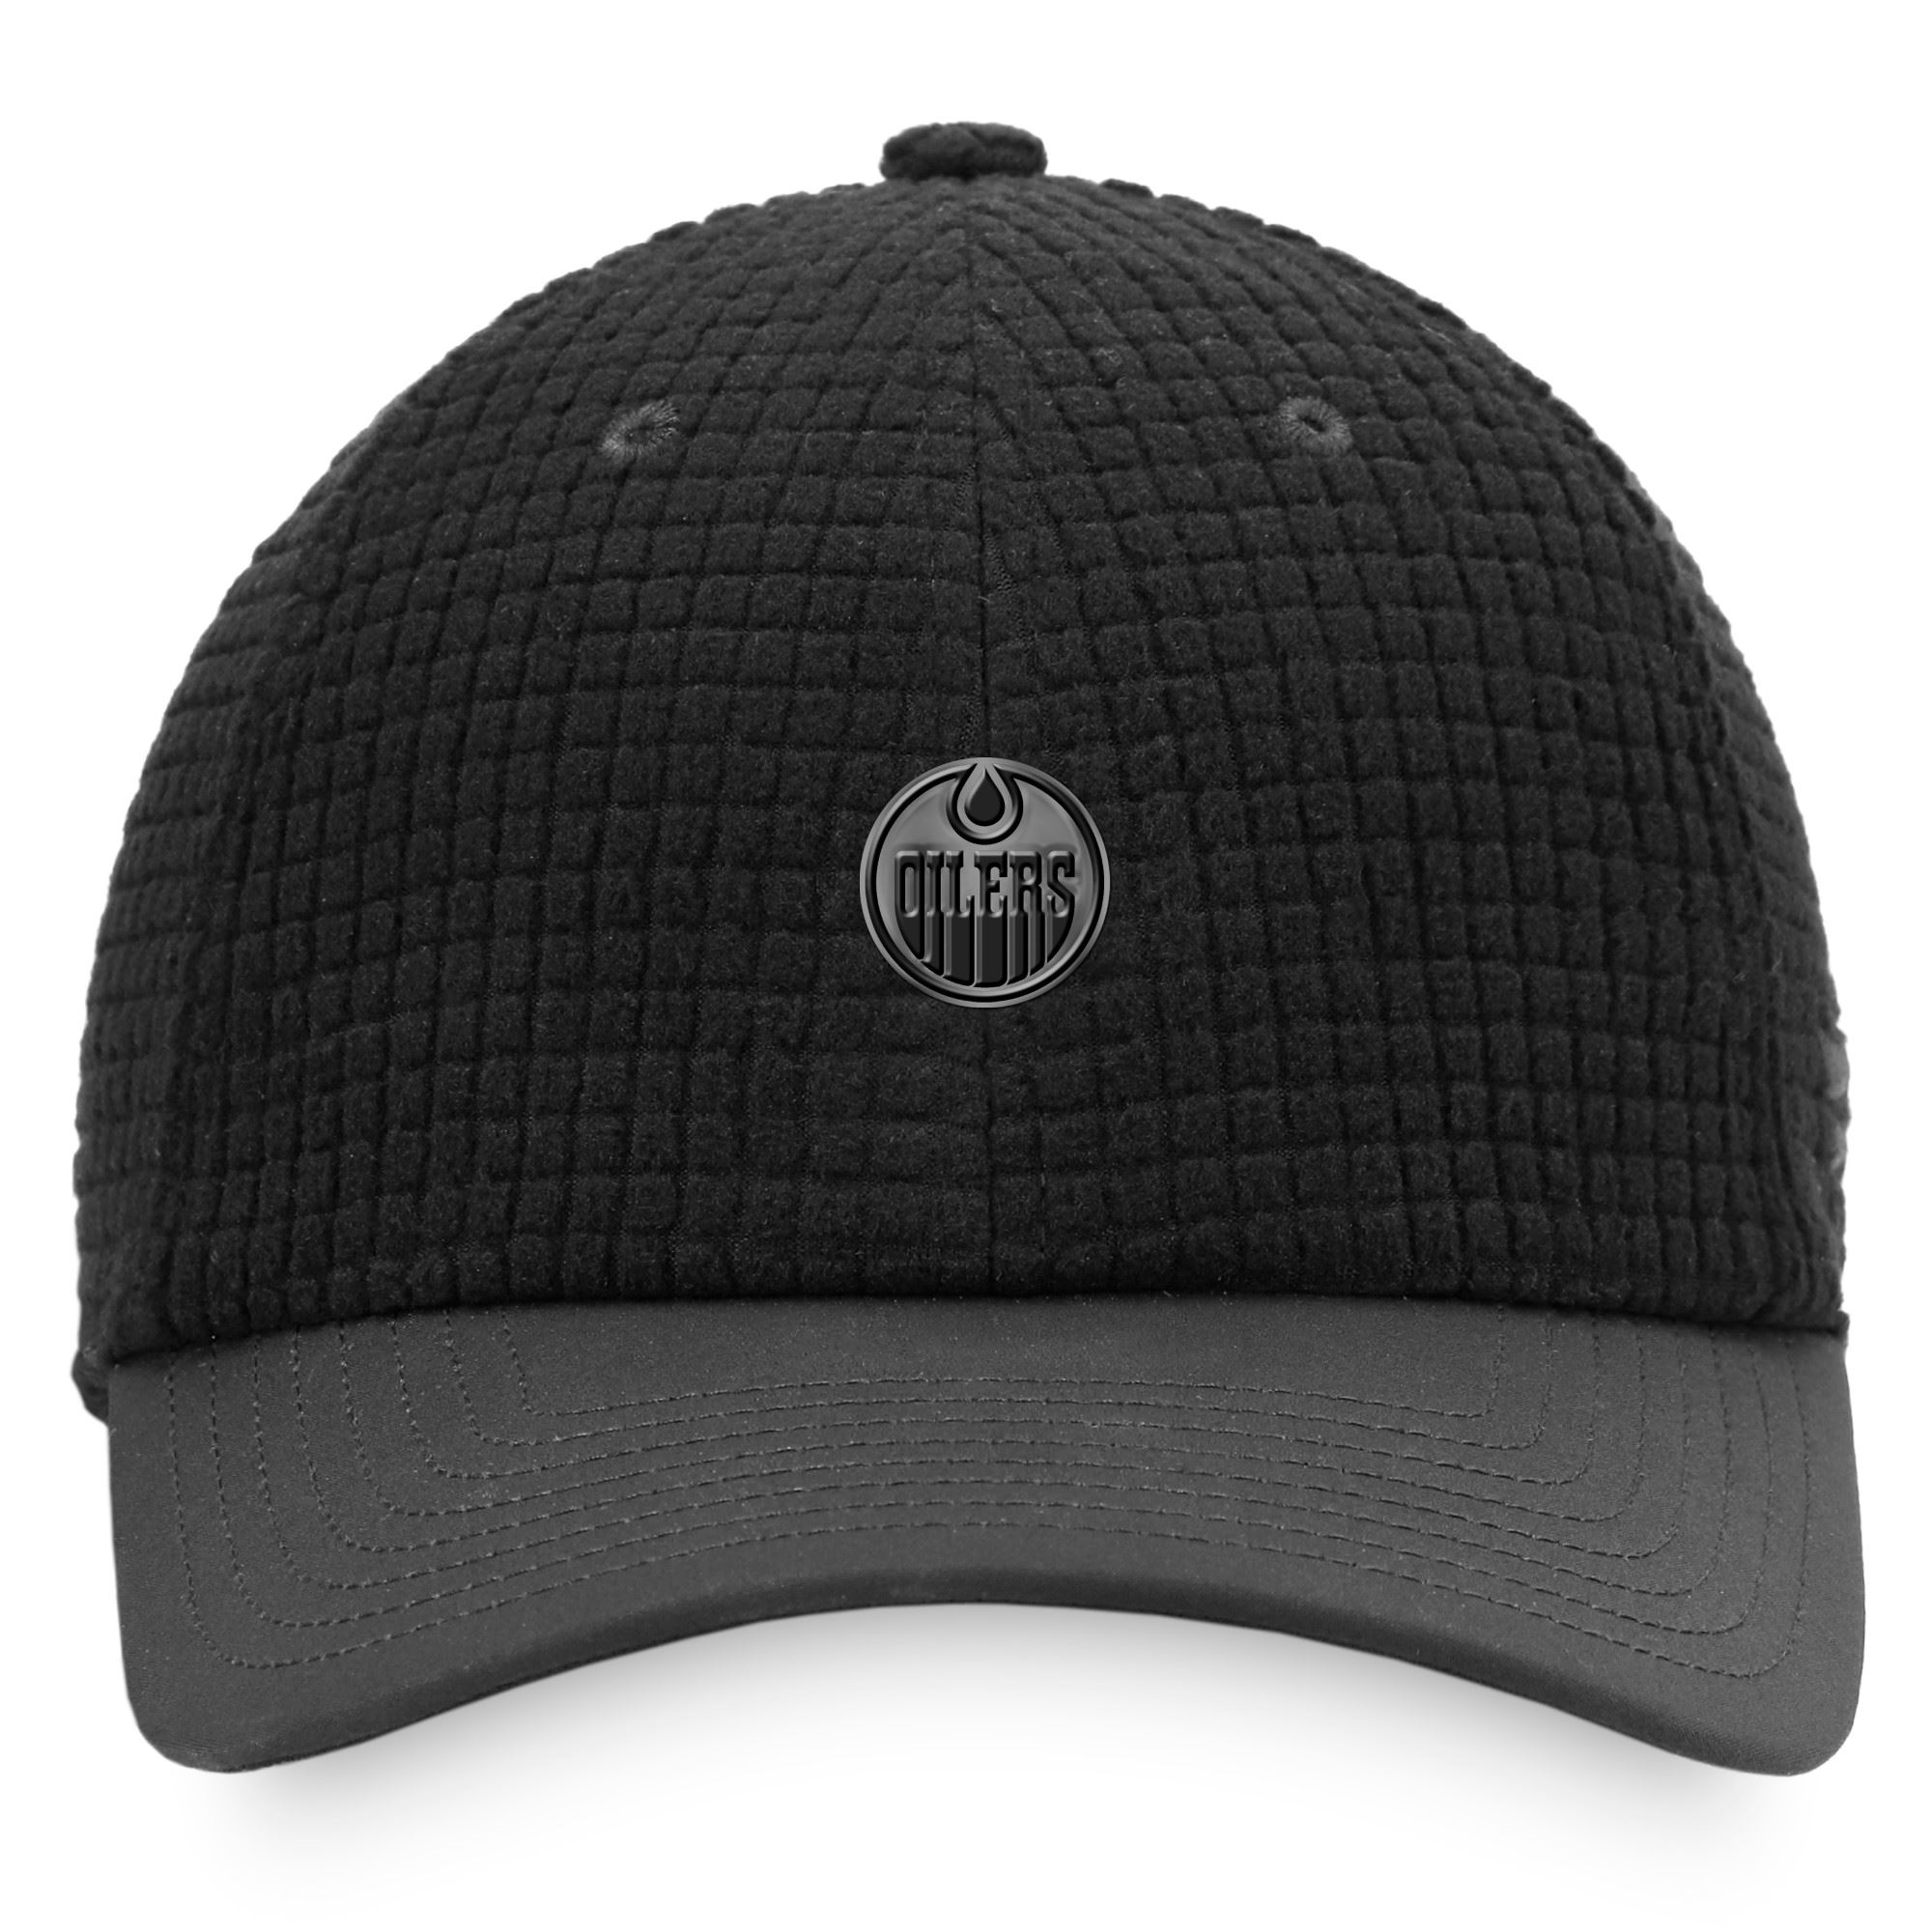 Edmonton Oilers NHL Authentic Pro Black Ice Unstructured Snapback Cap Fanatics